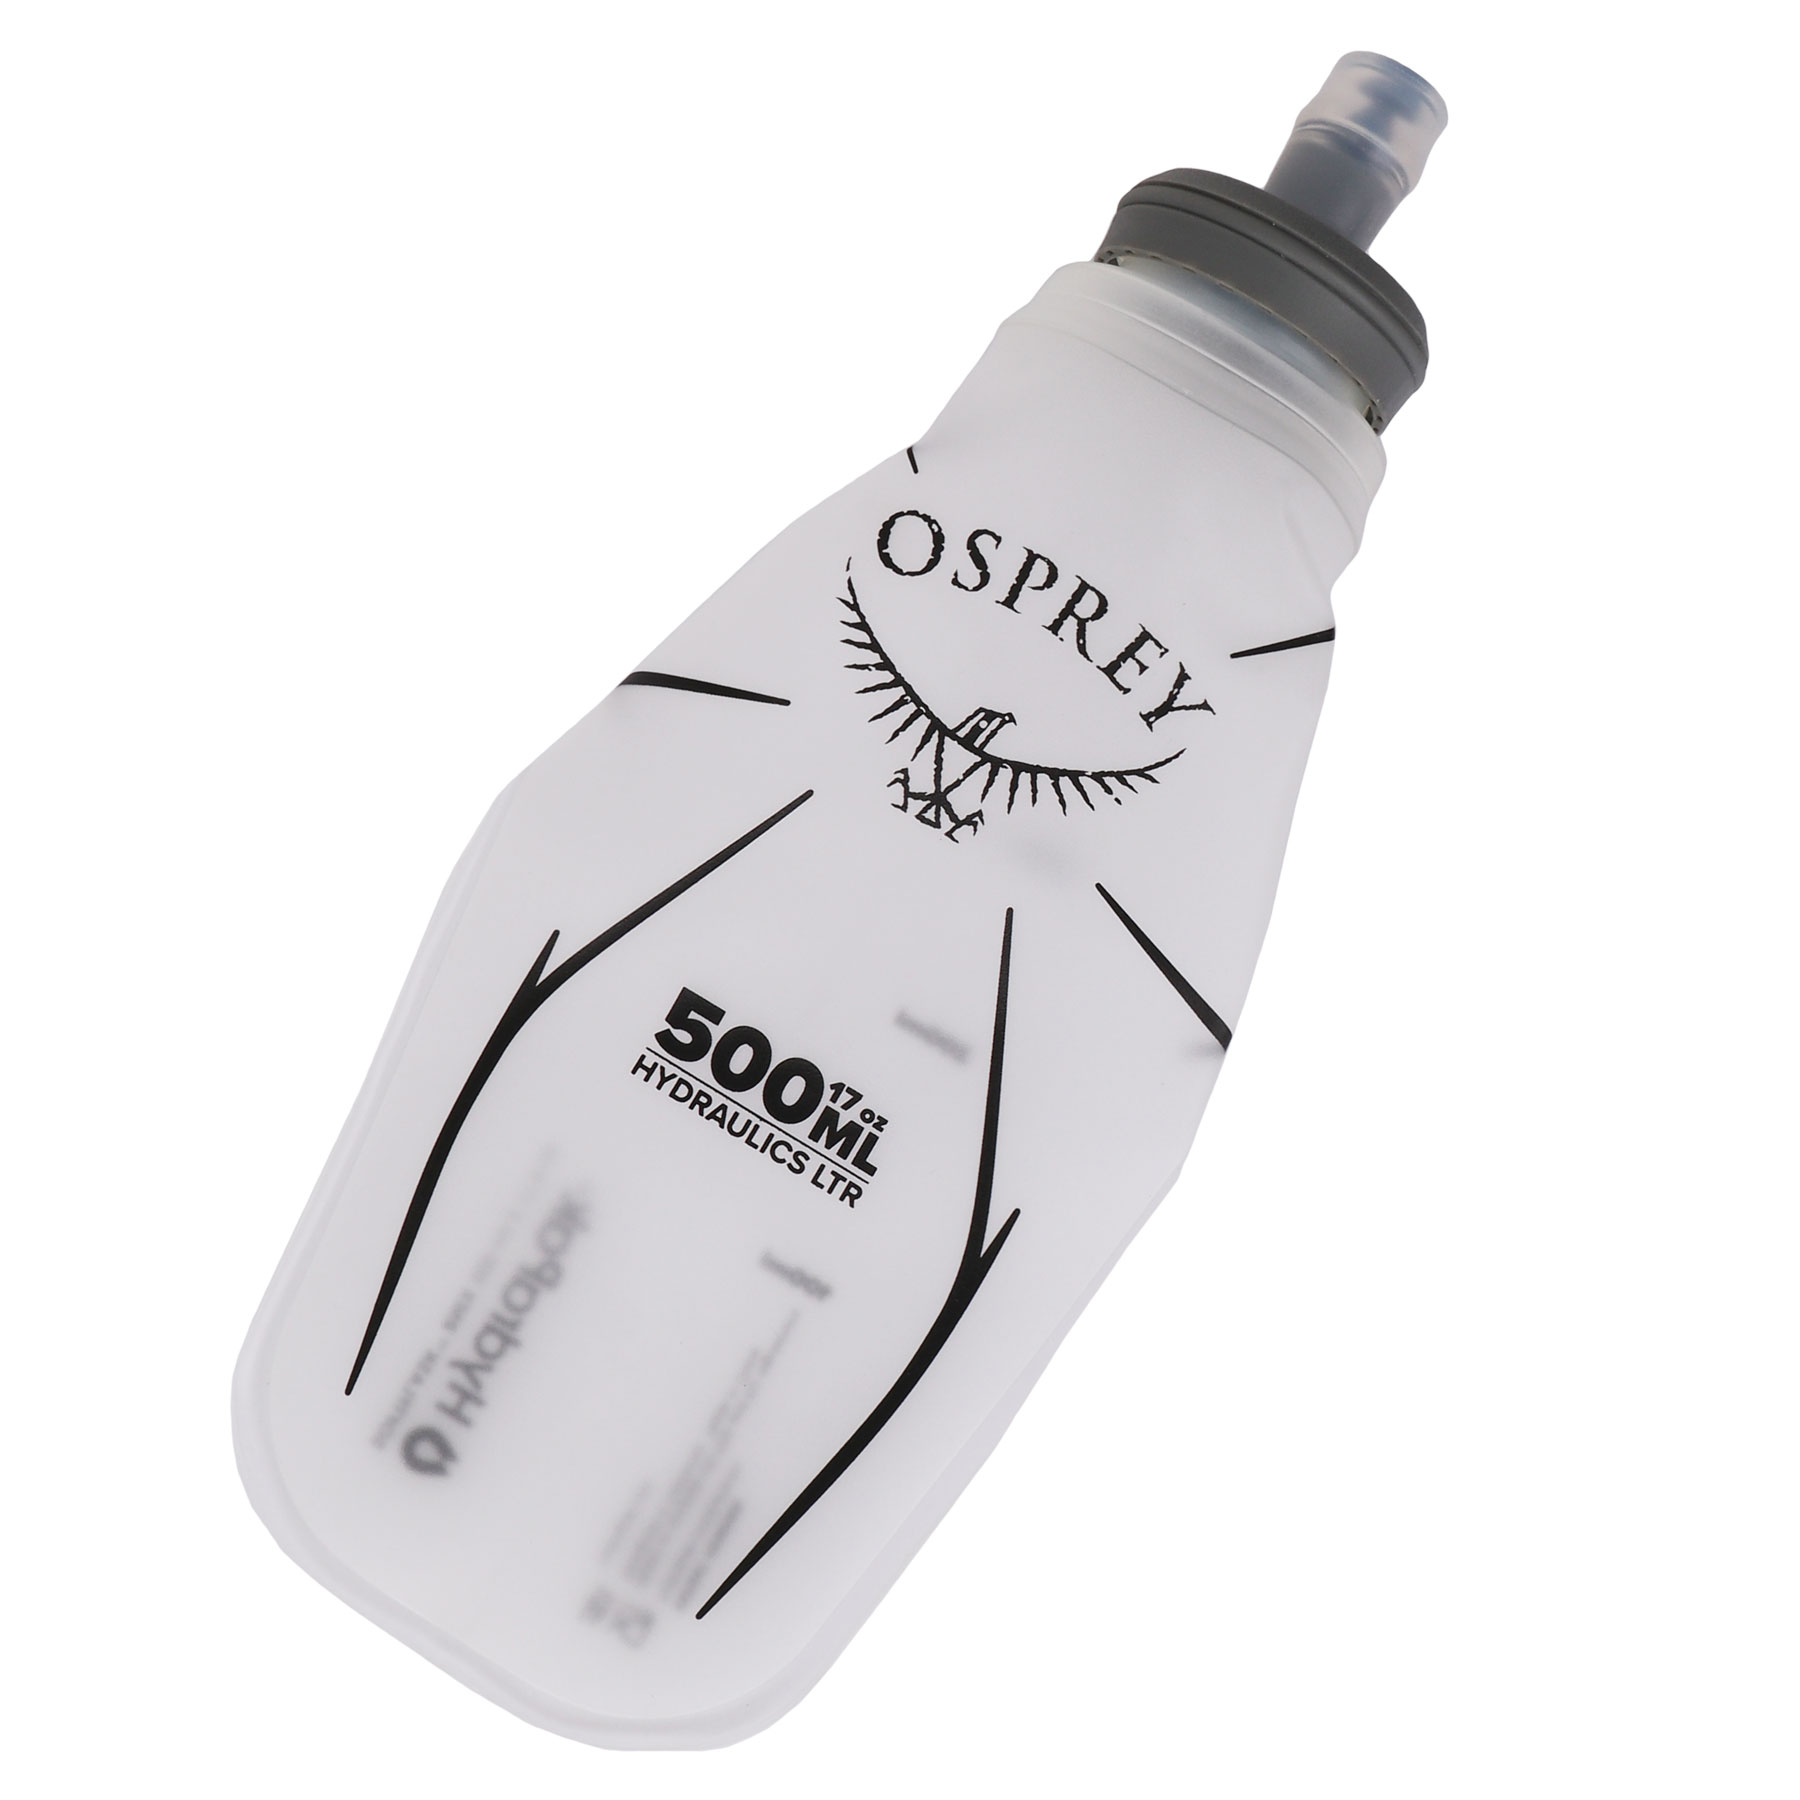 Productfoto van Osprey Hydraulics Soft Flask - 500ml